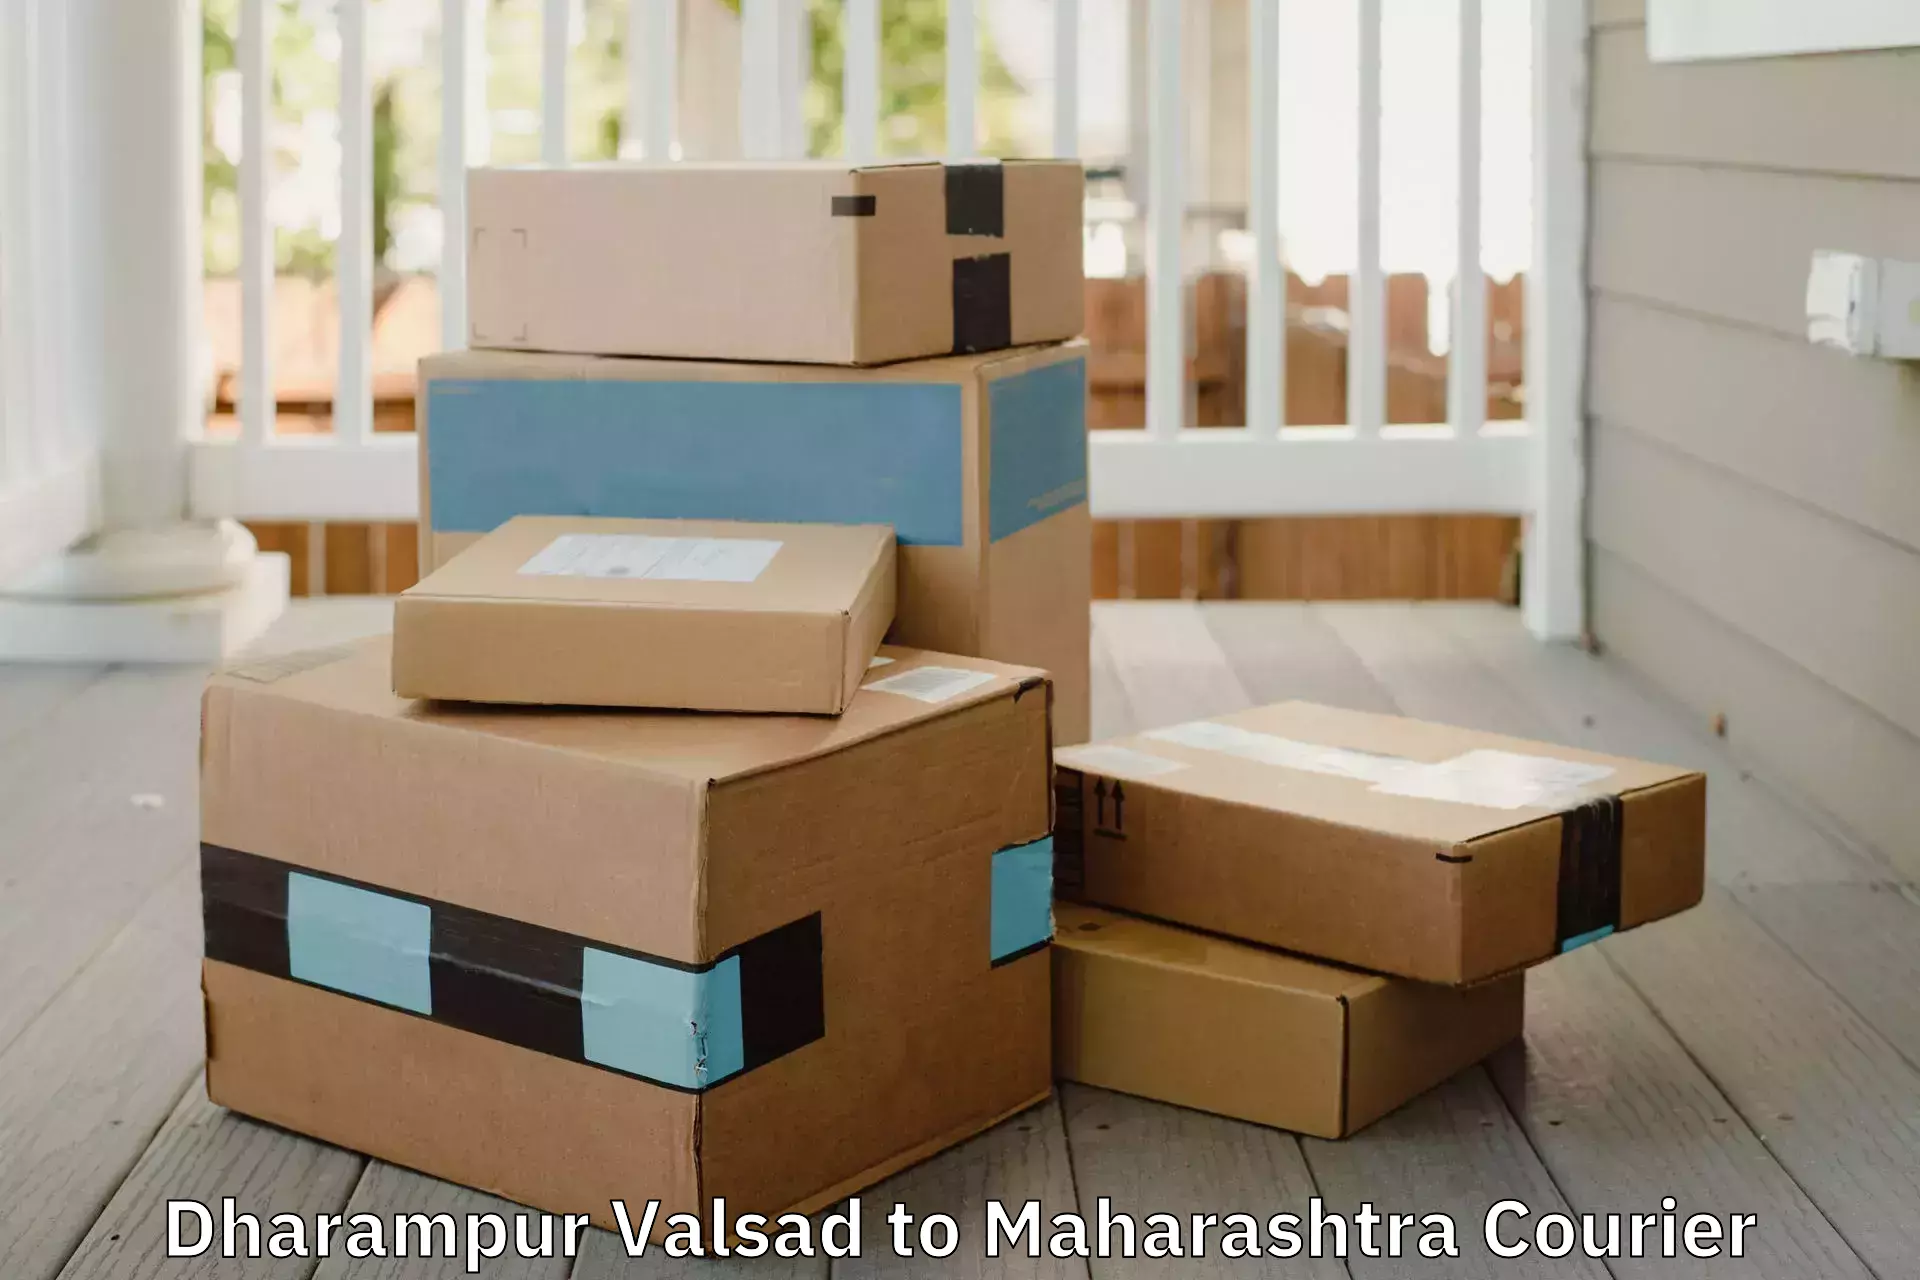 Furniture moving experts Dharampur Valsad to Maharashtra